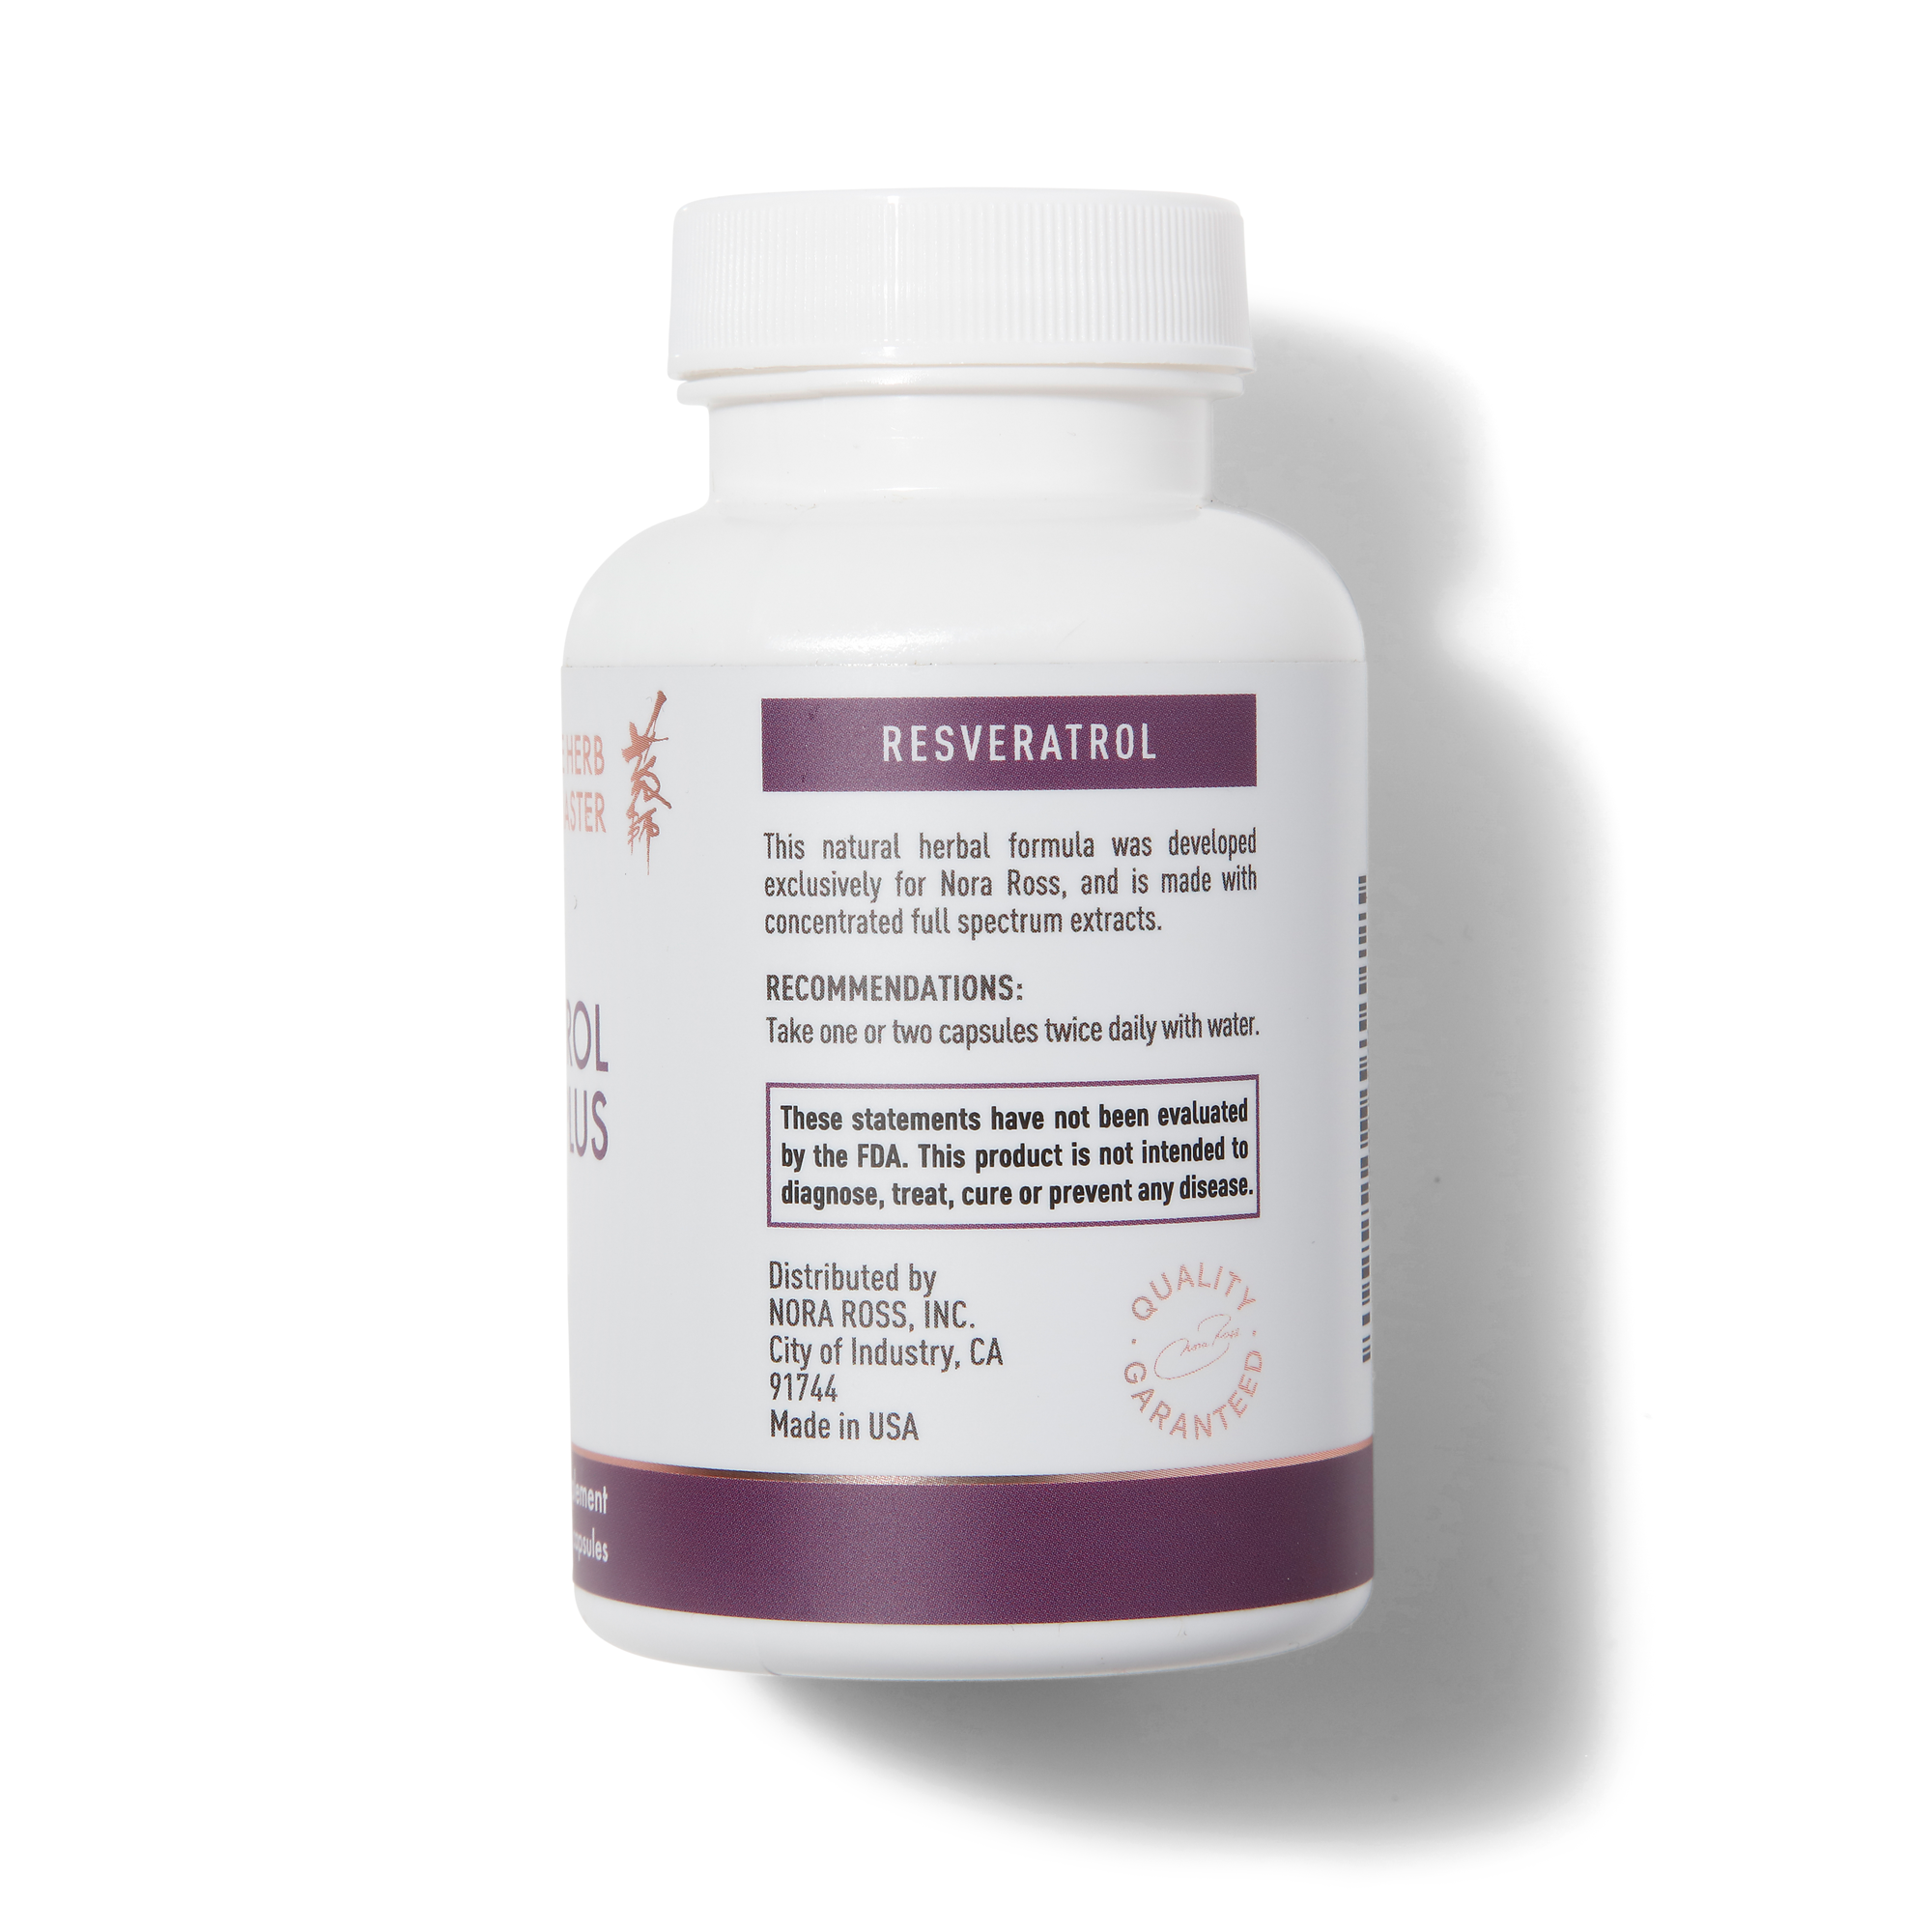 Resveratrol Plus® Supplements - Potent Antioxidants & Cinnamon Bark, Promotes Anti-Aging, Cardiovascular Support, Maximum Benefits